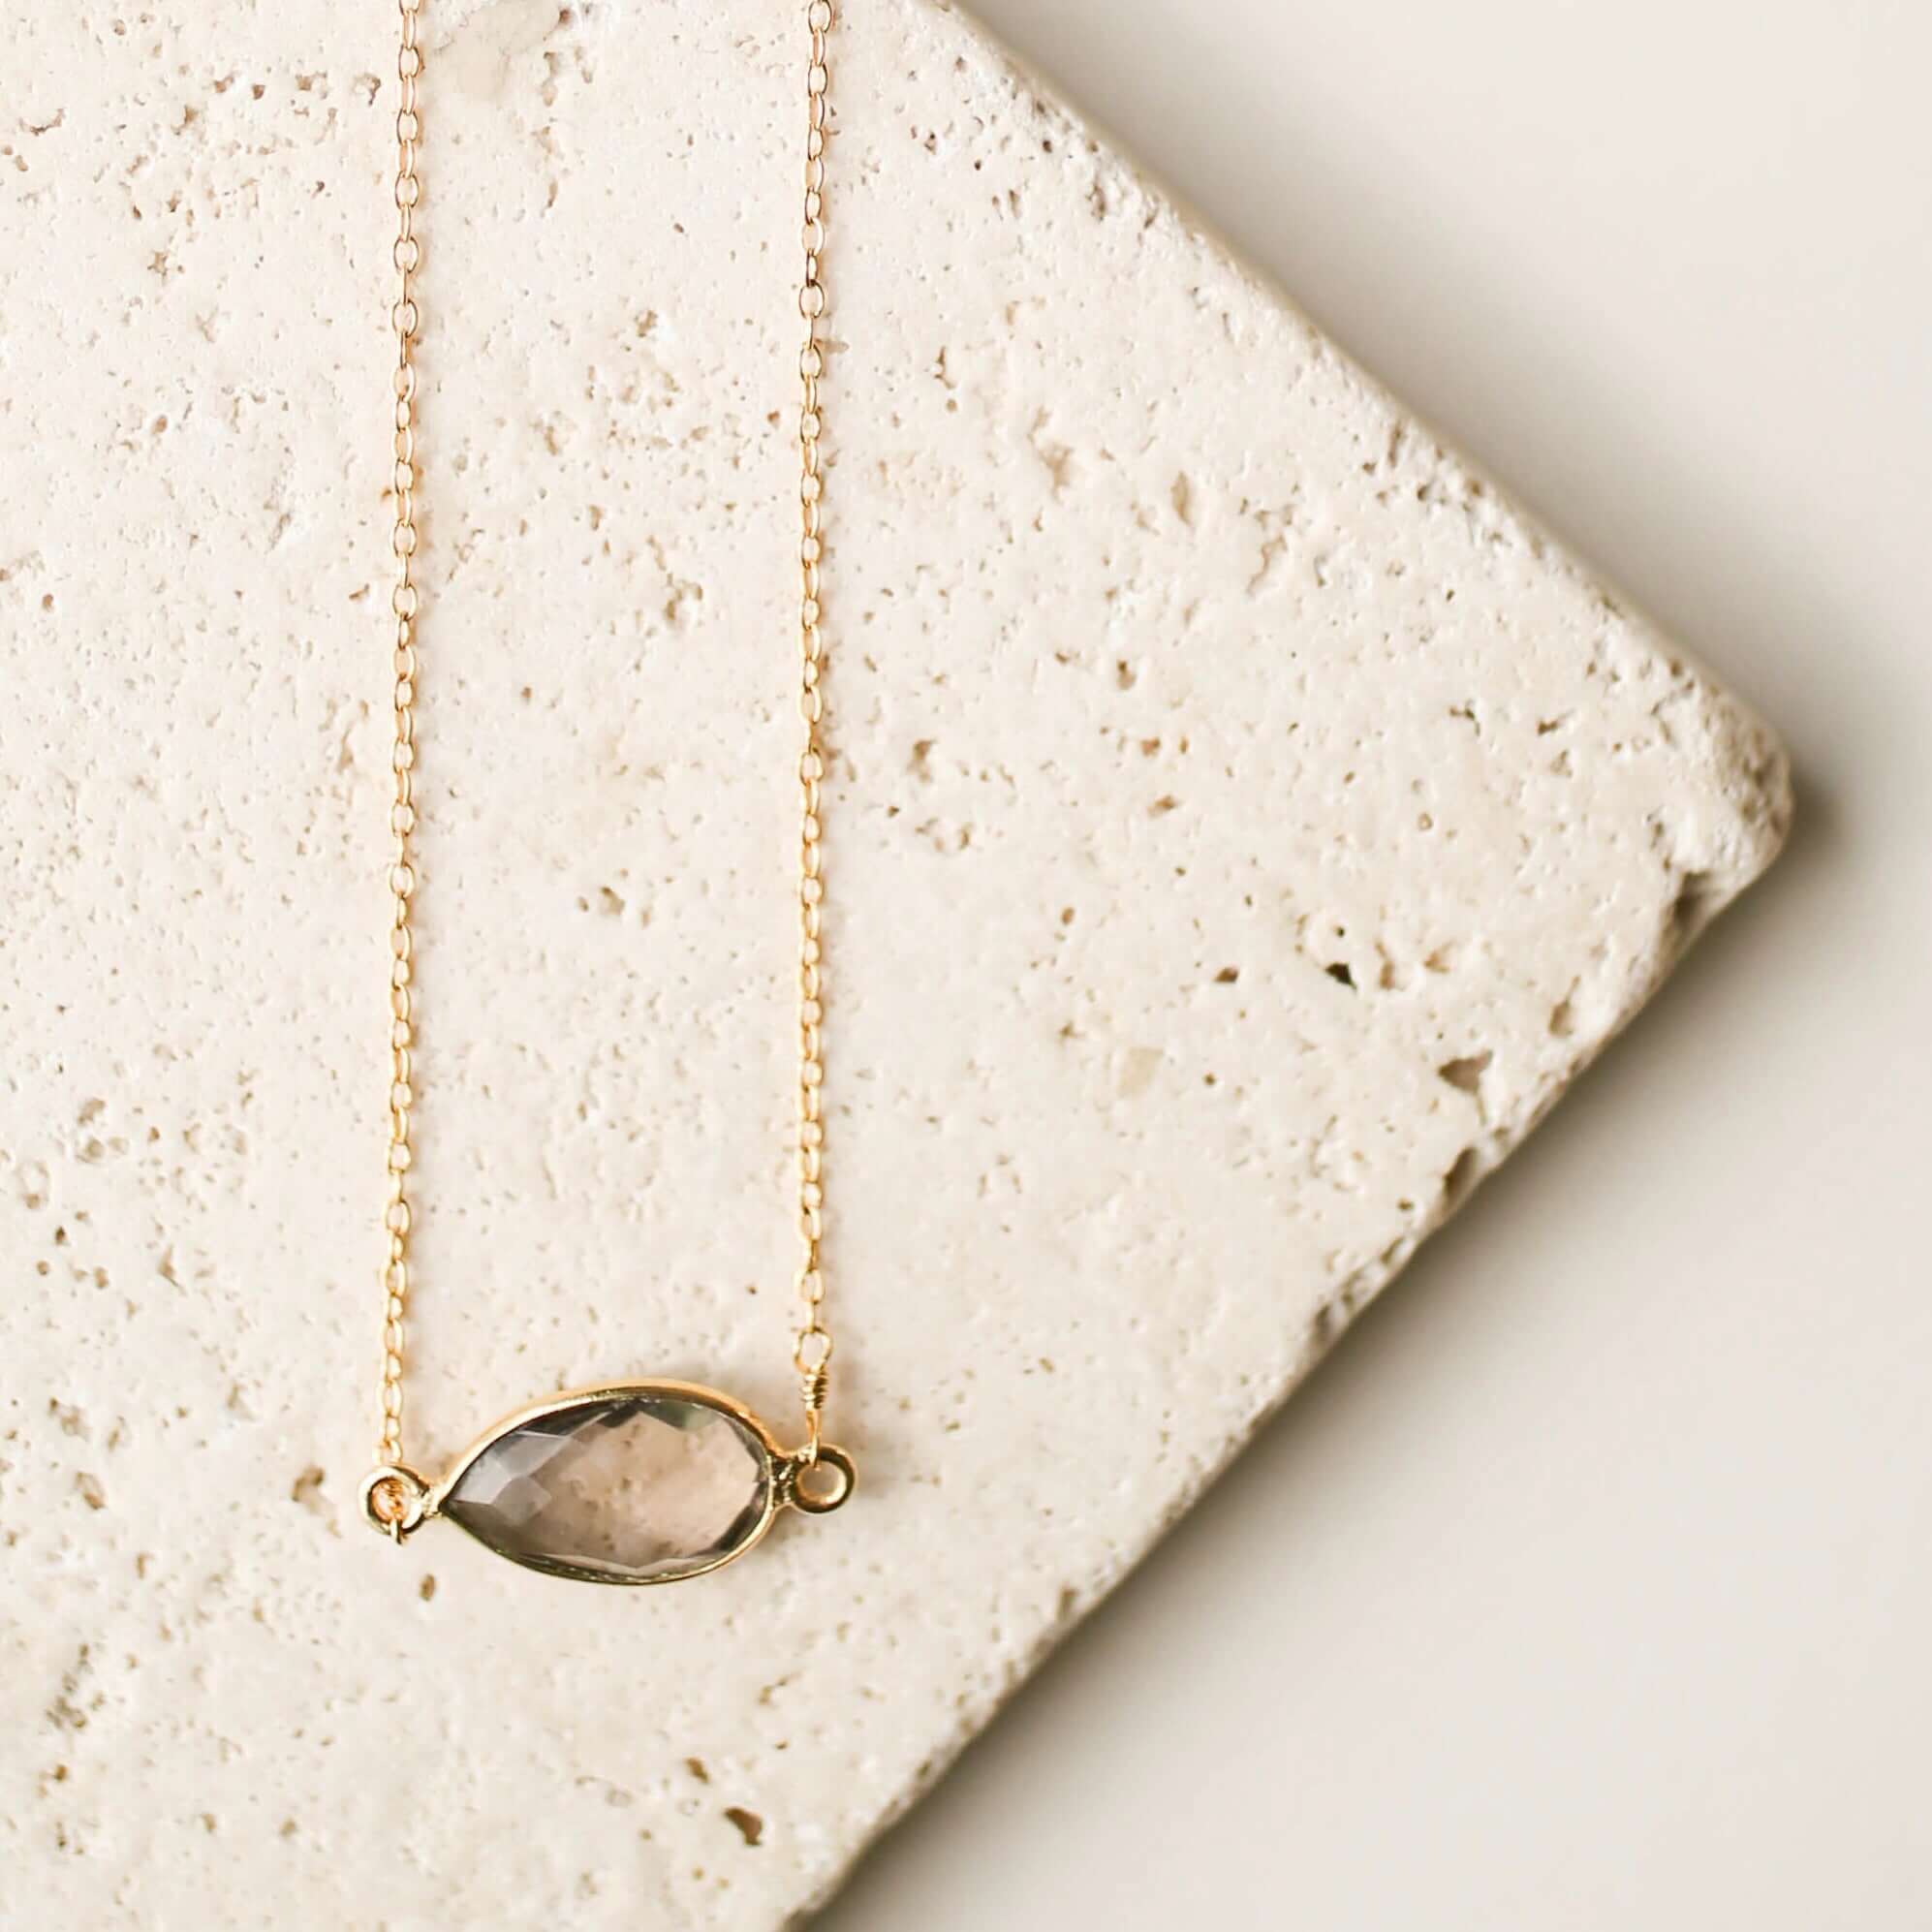 Minimalist Gold Necklace with Bezel-Set Smoky Quartz Stone